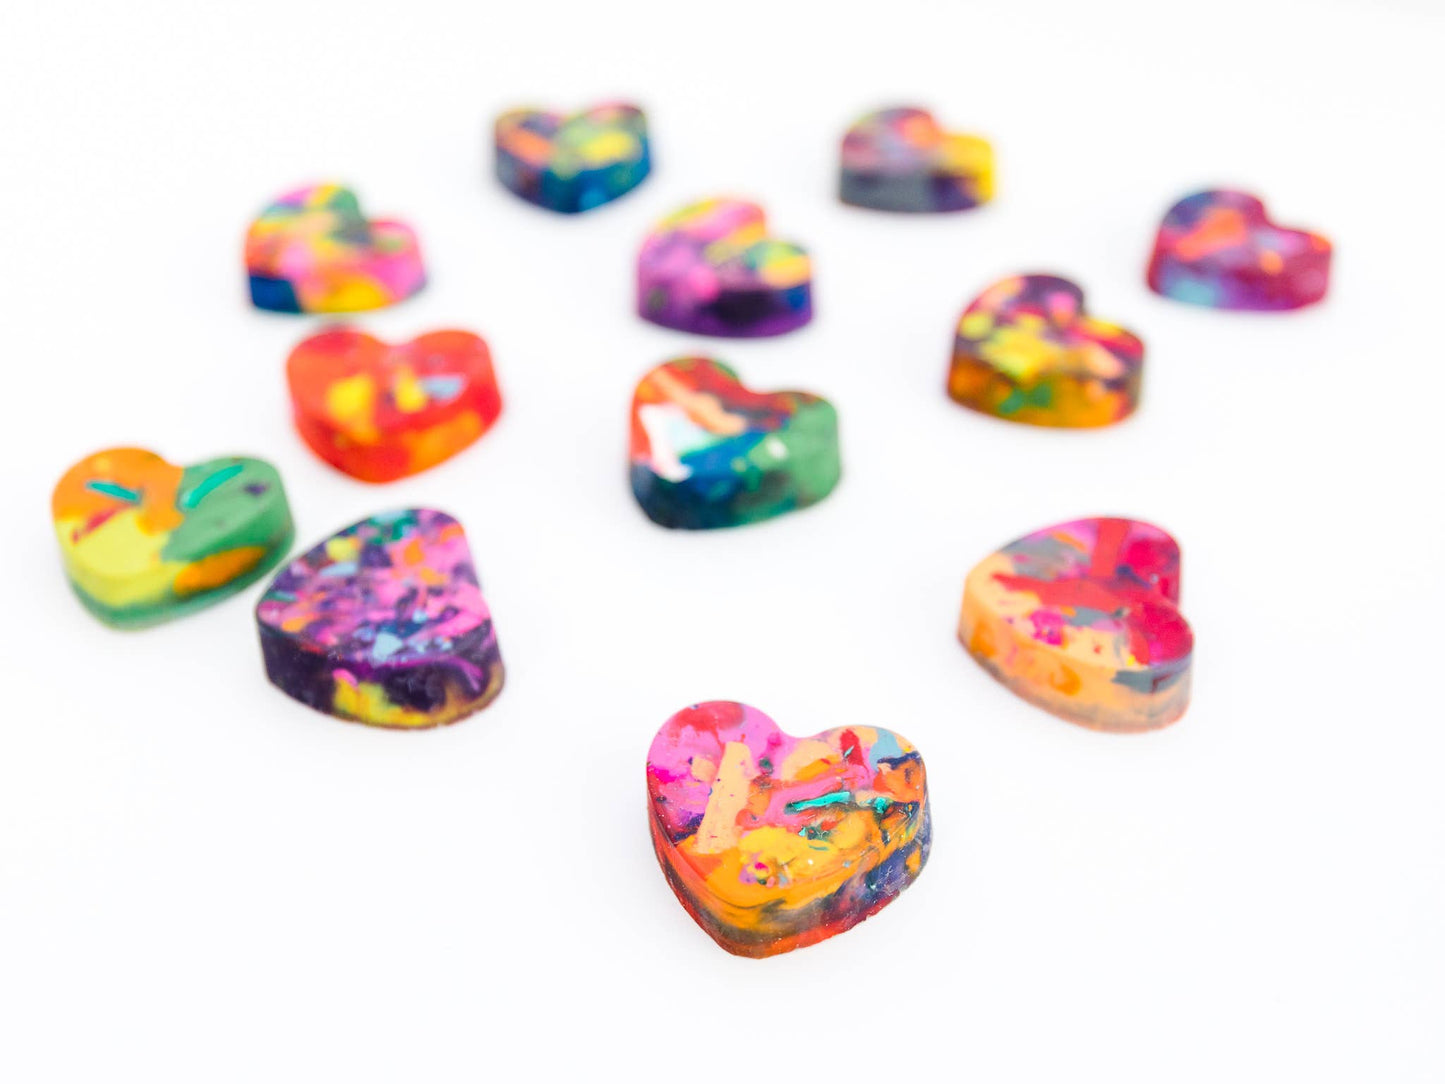 Mini Heart Original Rainbow Crayon® Boxed Set of 4